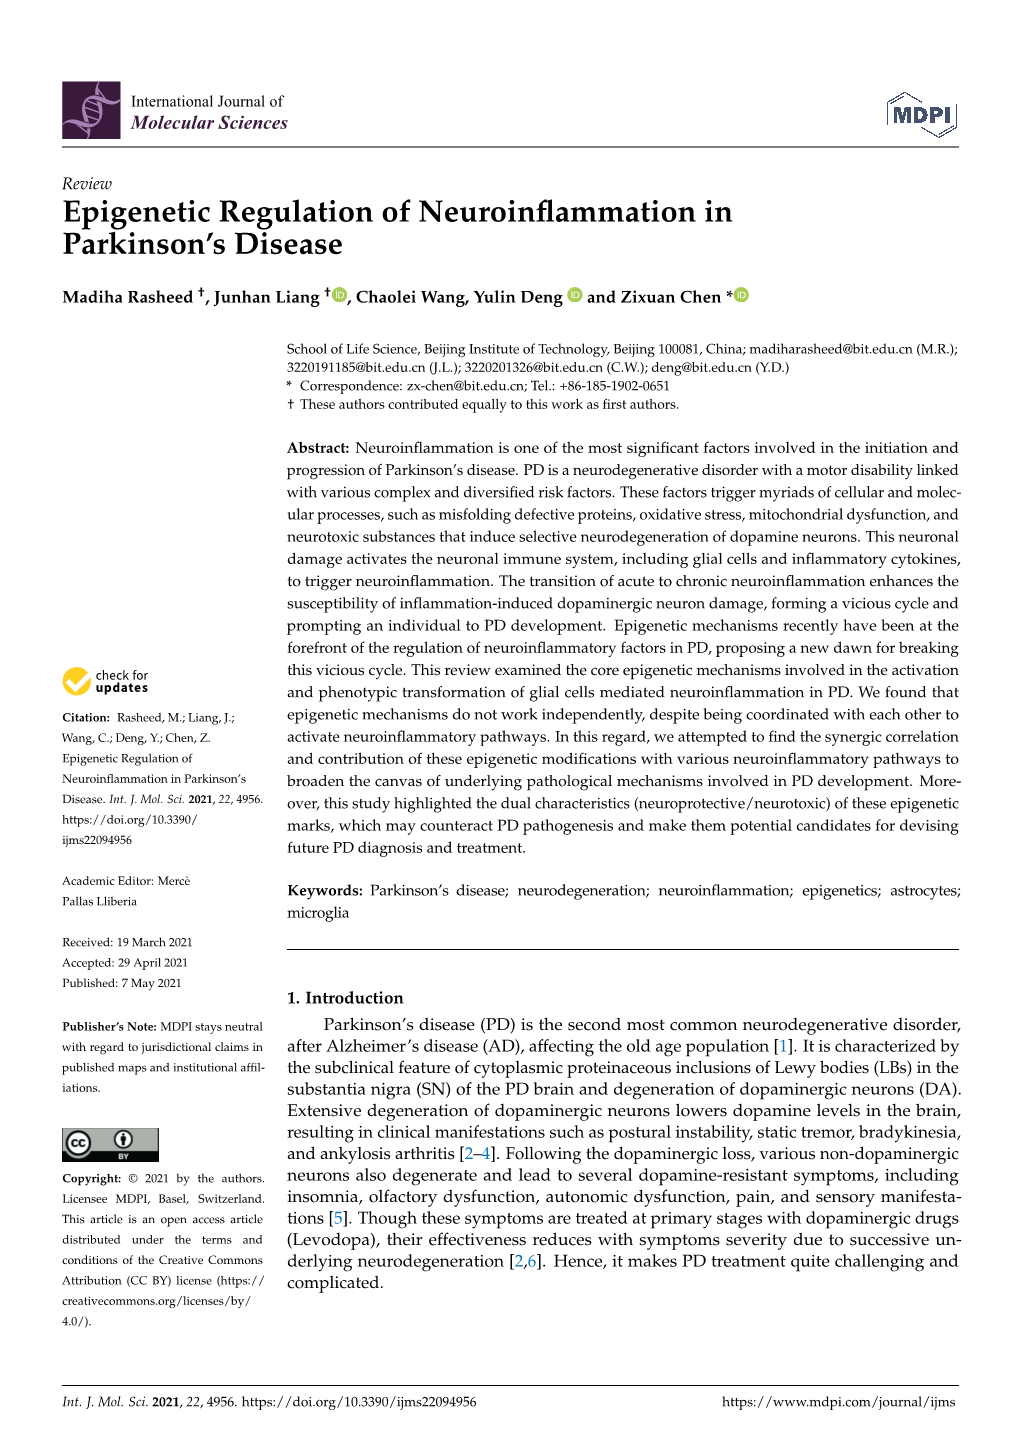 Epigenetic Regulation of Neuroinflammation in Parkinson's